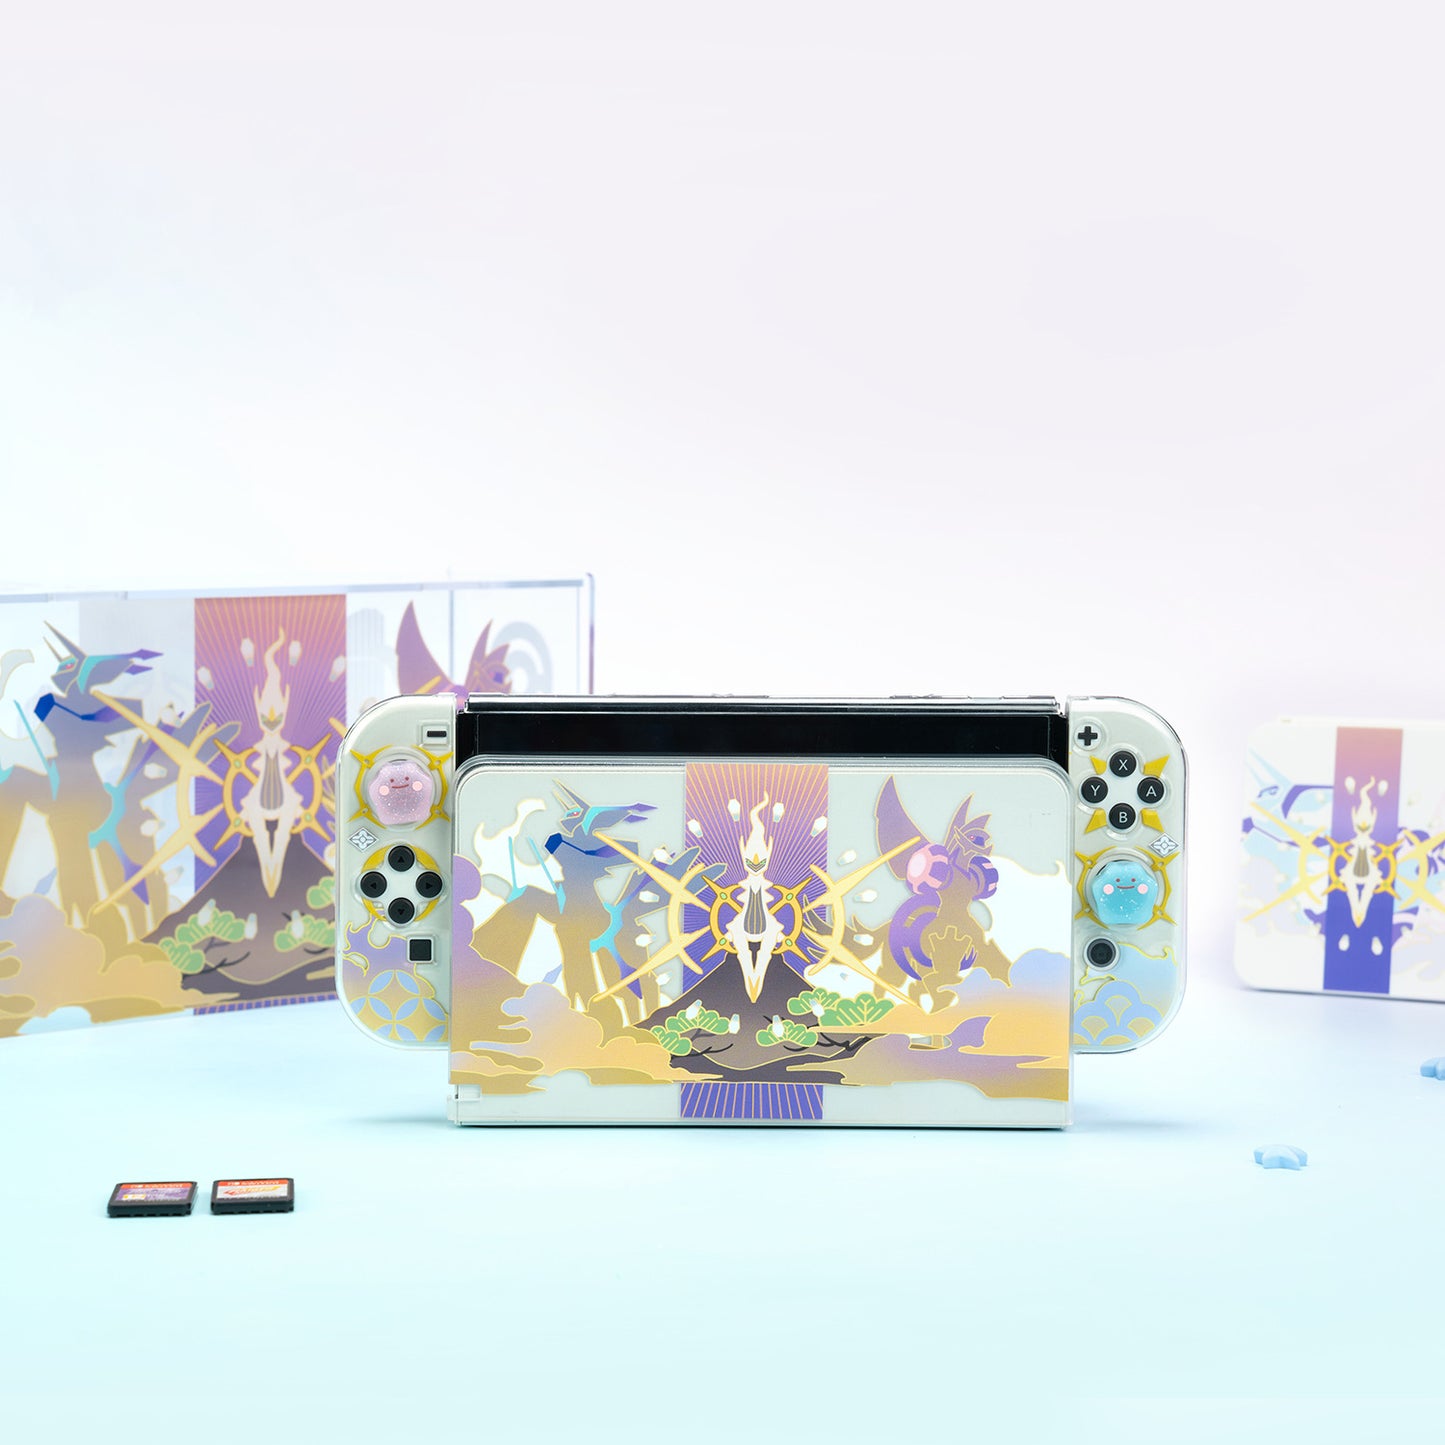 Pokémon Legends: Arceus Custom Nintendo Switch Boxart With 